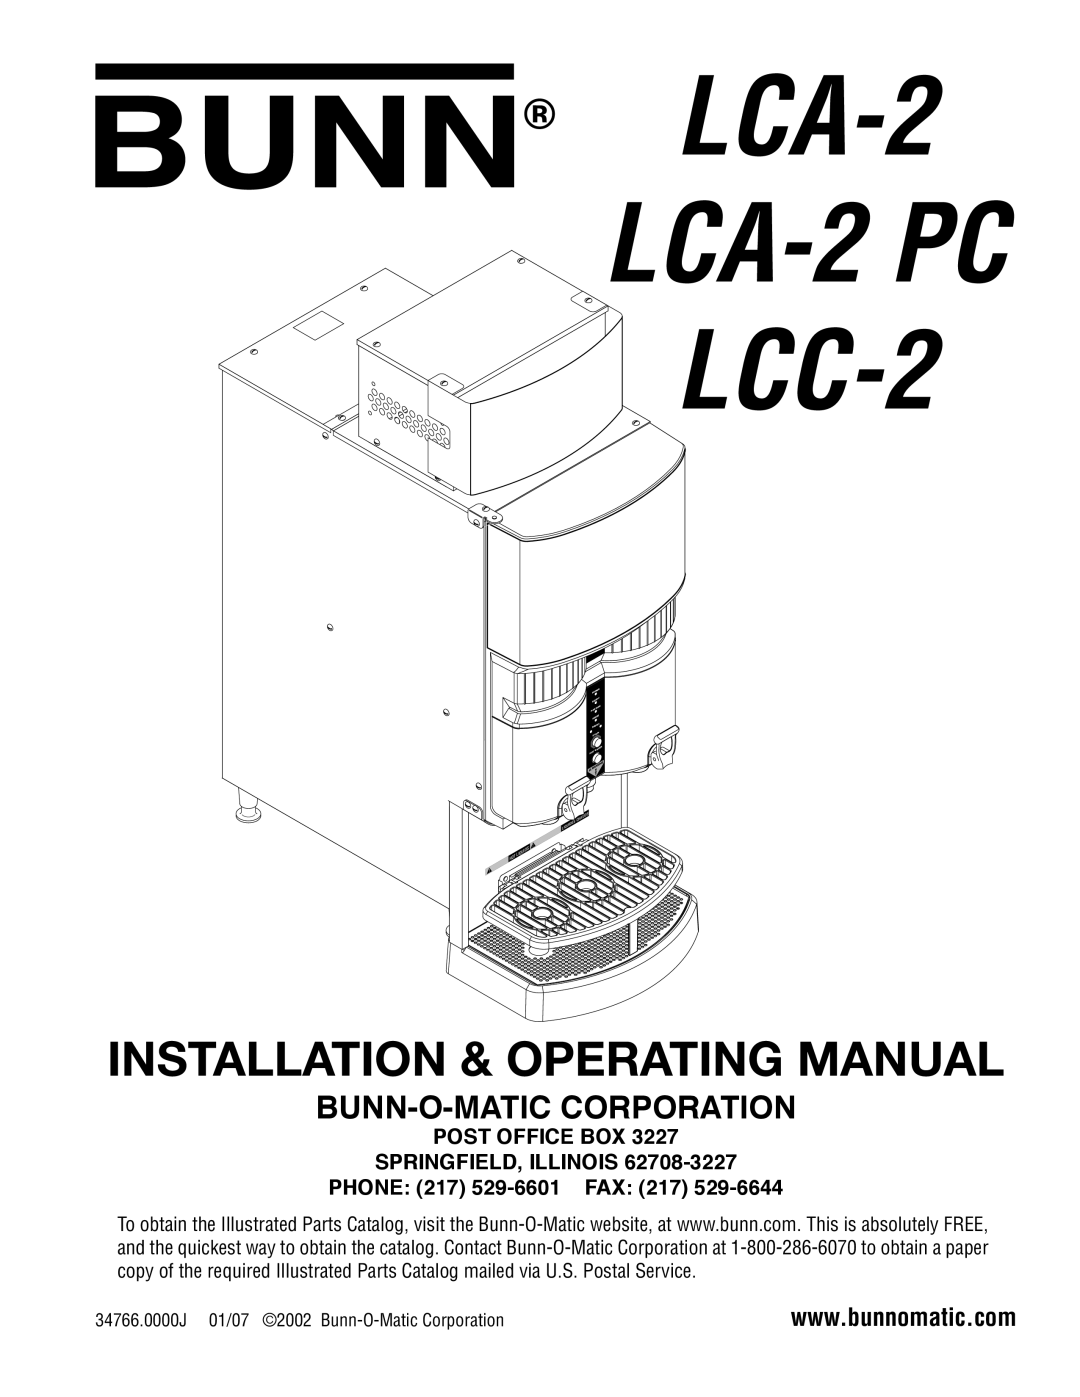 Bunn manual LCA-2 LCA-2A LCA-2 PC LCC-2, Installation & Operating Guide, Bunn-O-Matic Corporation, Liqu, S Chau, Ready 